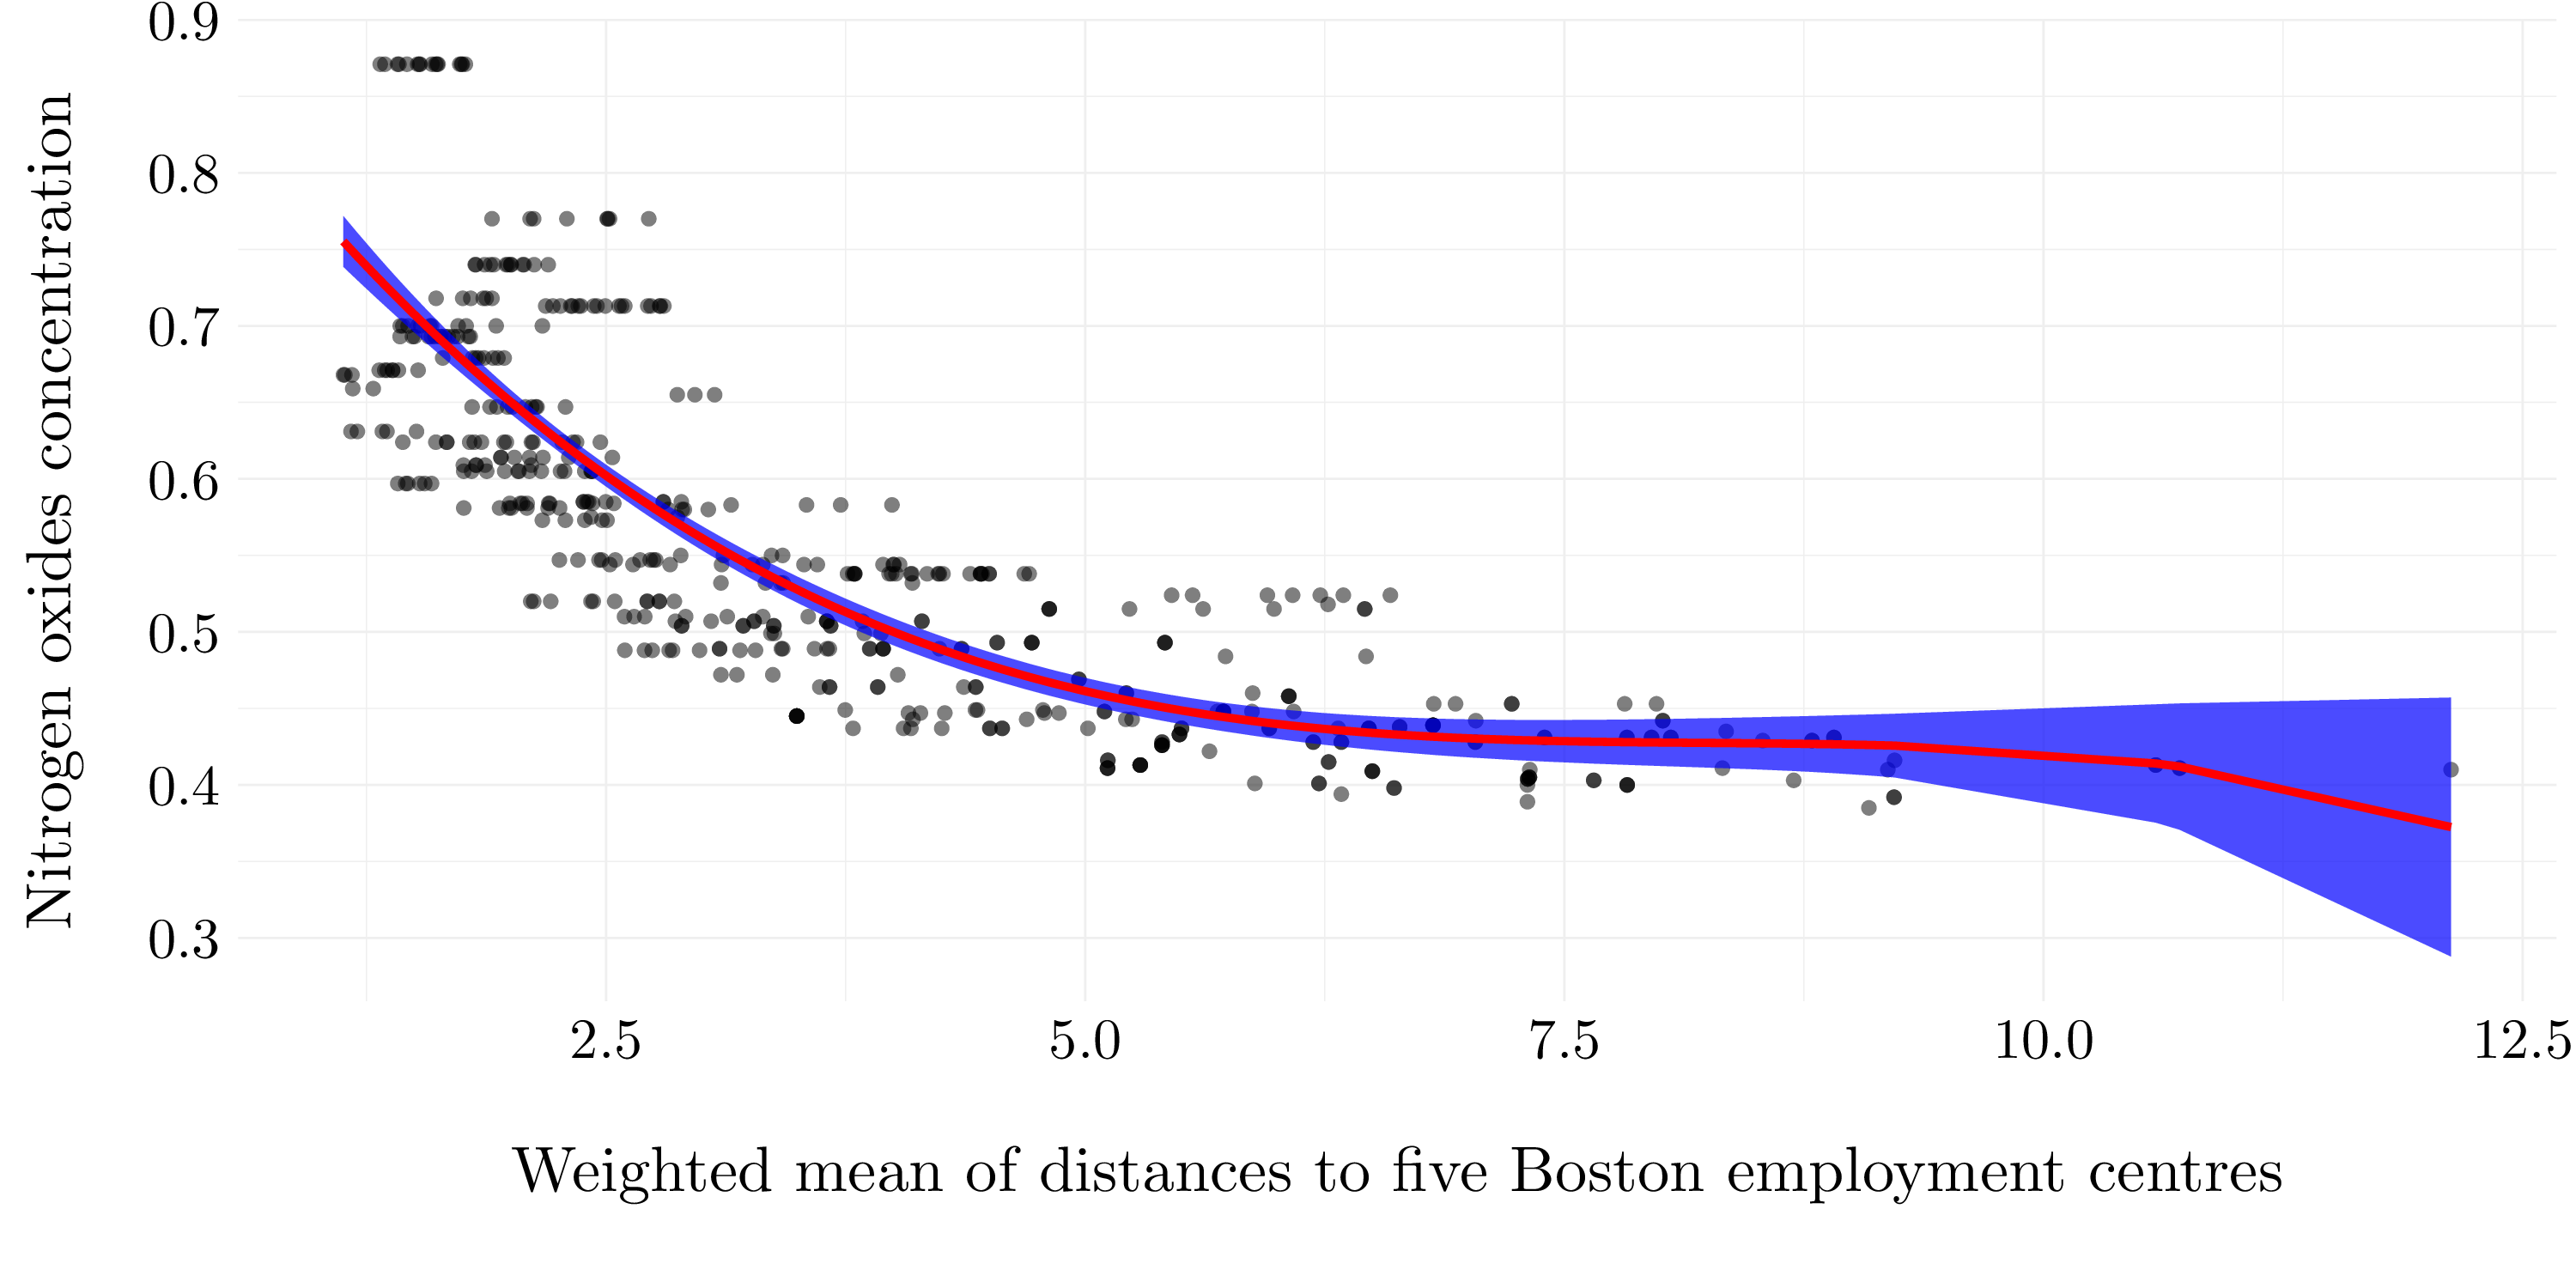 Cubic polynomial regression model